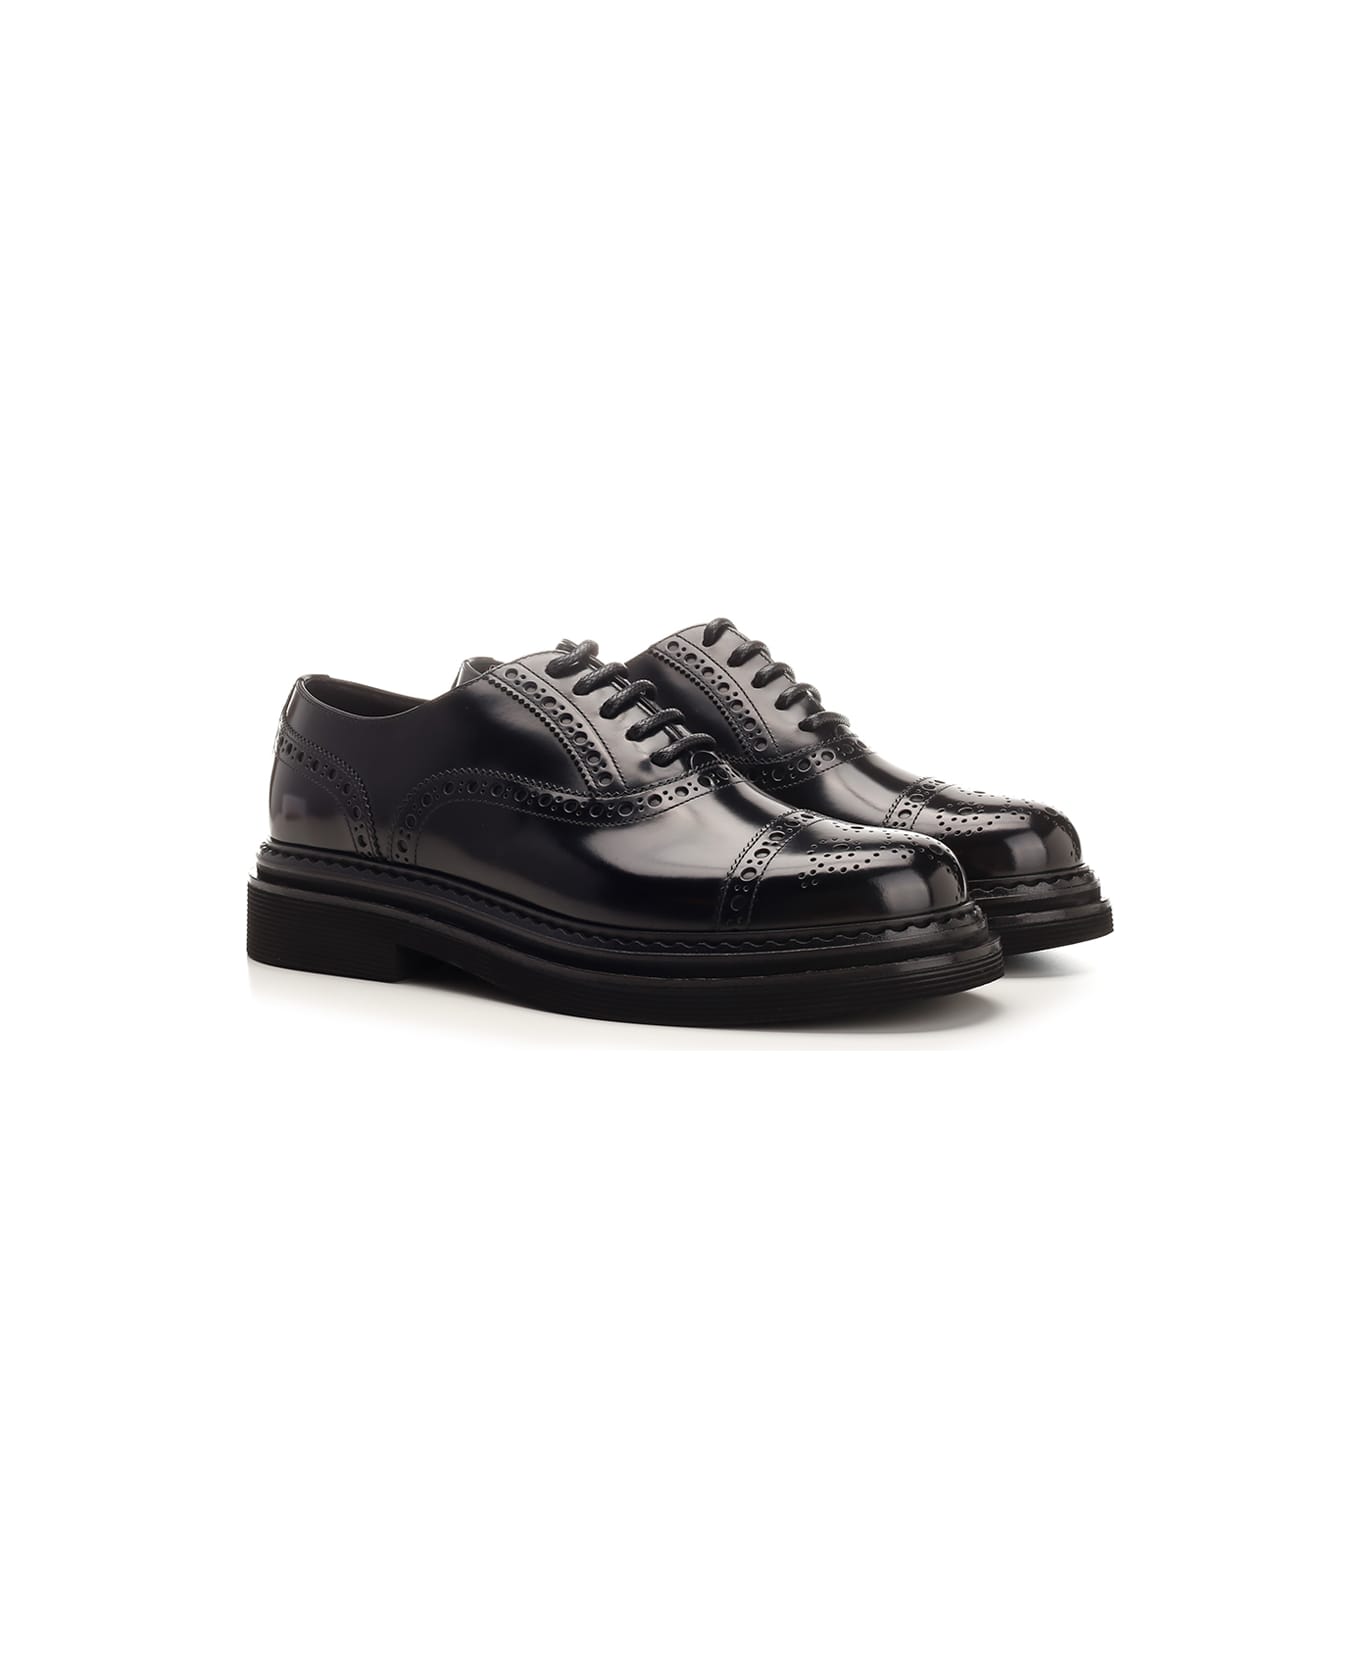 BOOTS BON HUTCH Leather Oxford Shoes - Nero